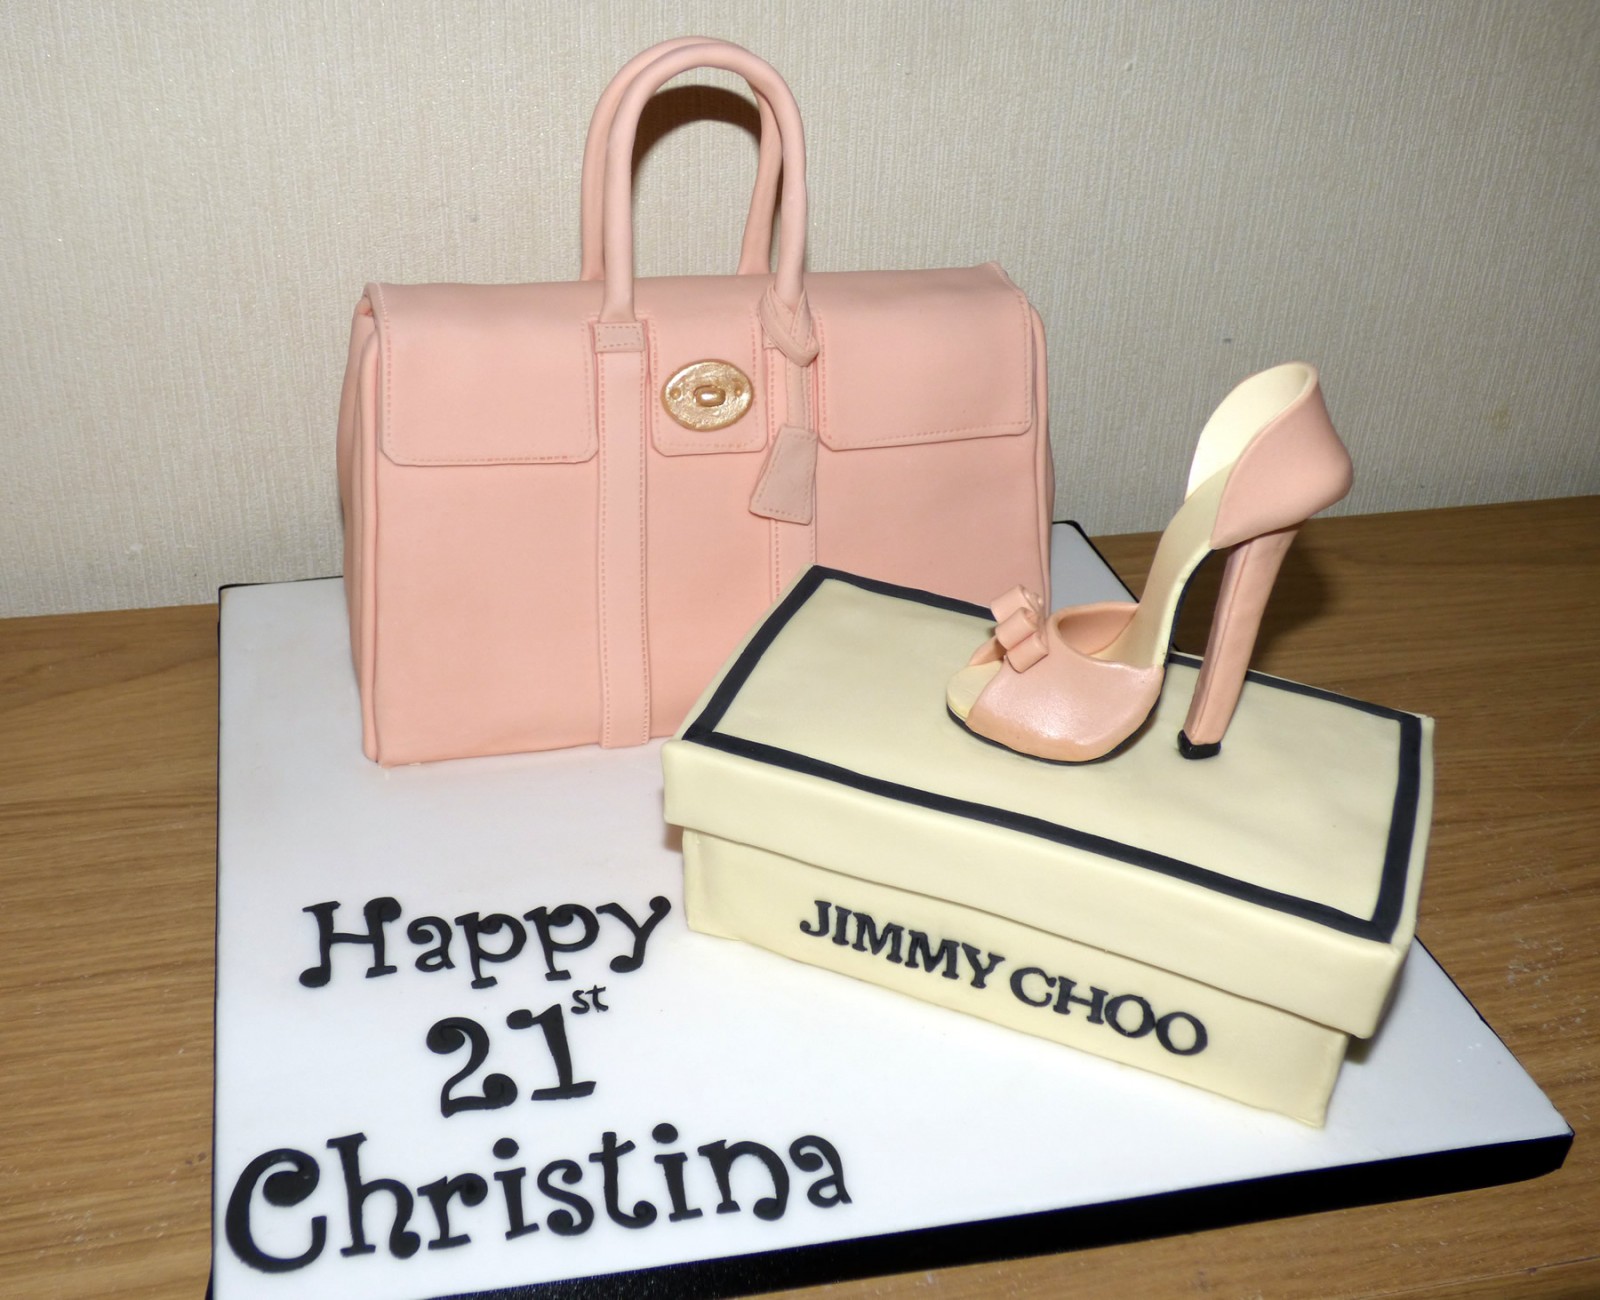 Pink Mulberry Handbag Cake with Jimmy Choo Shoe